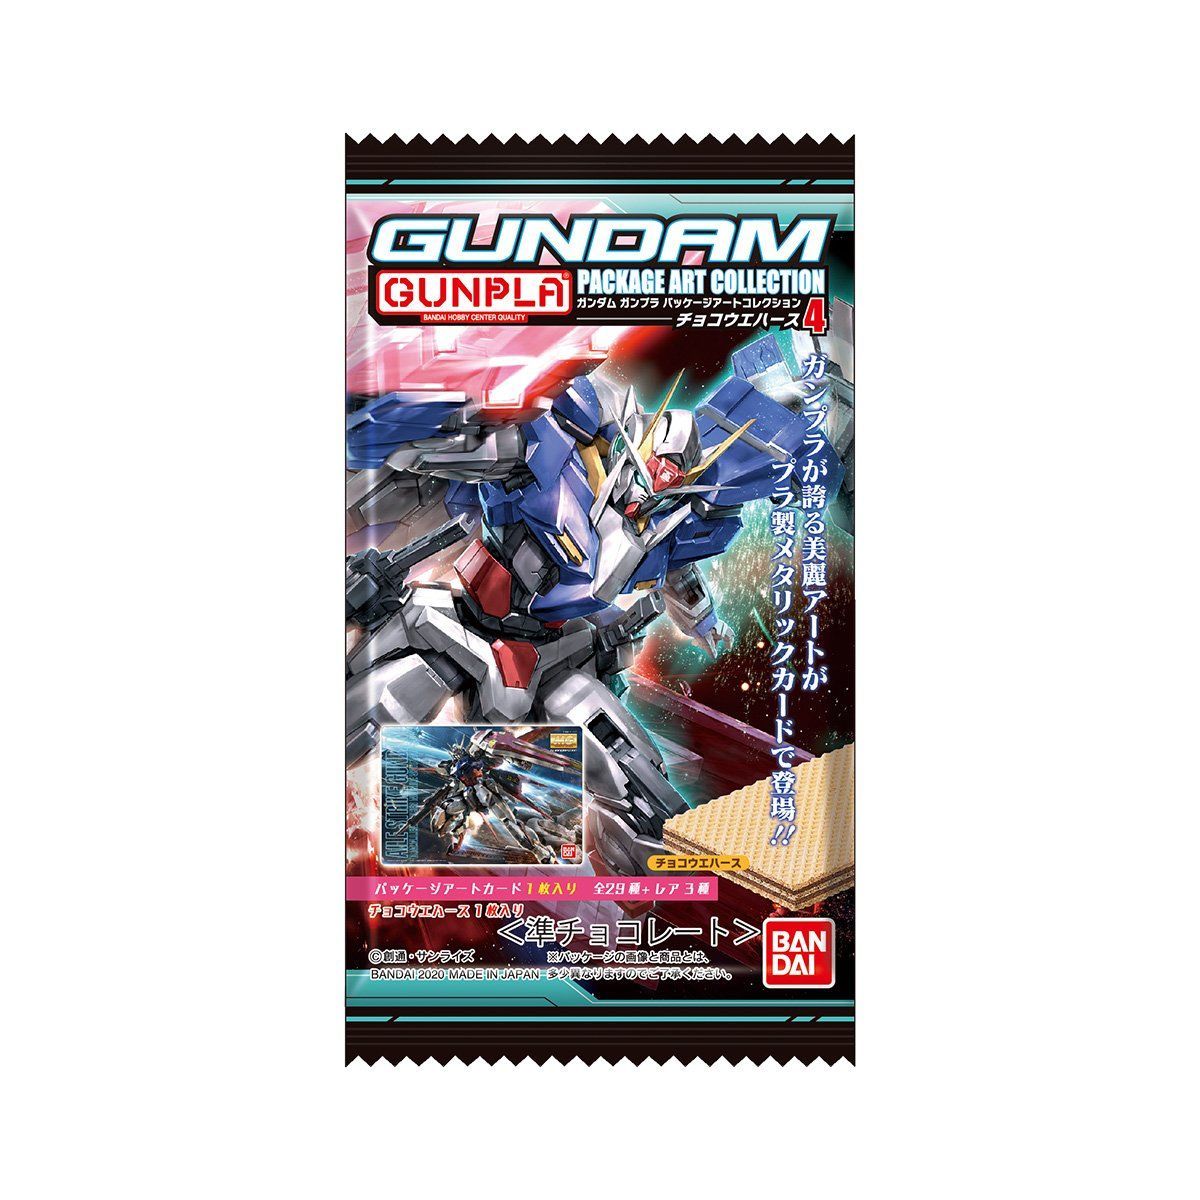 Gundam Gunpla Package Art Collection